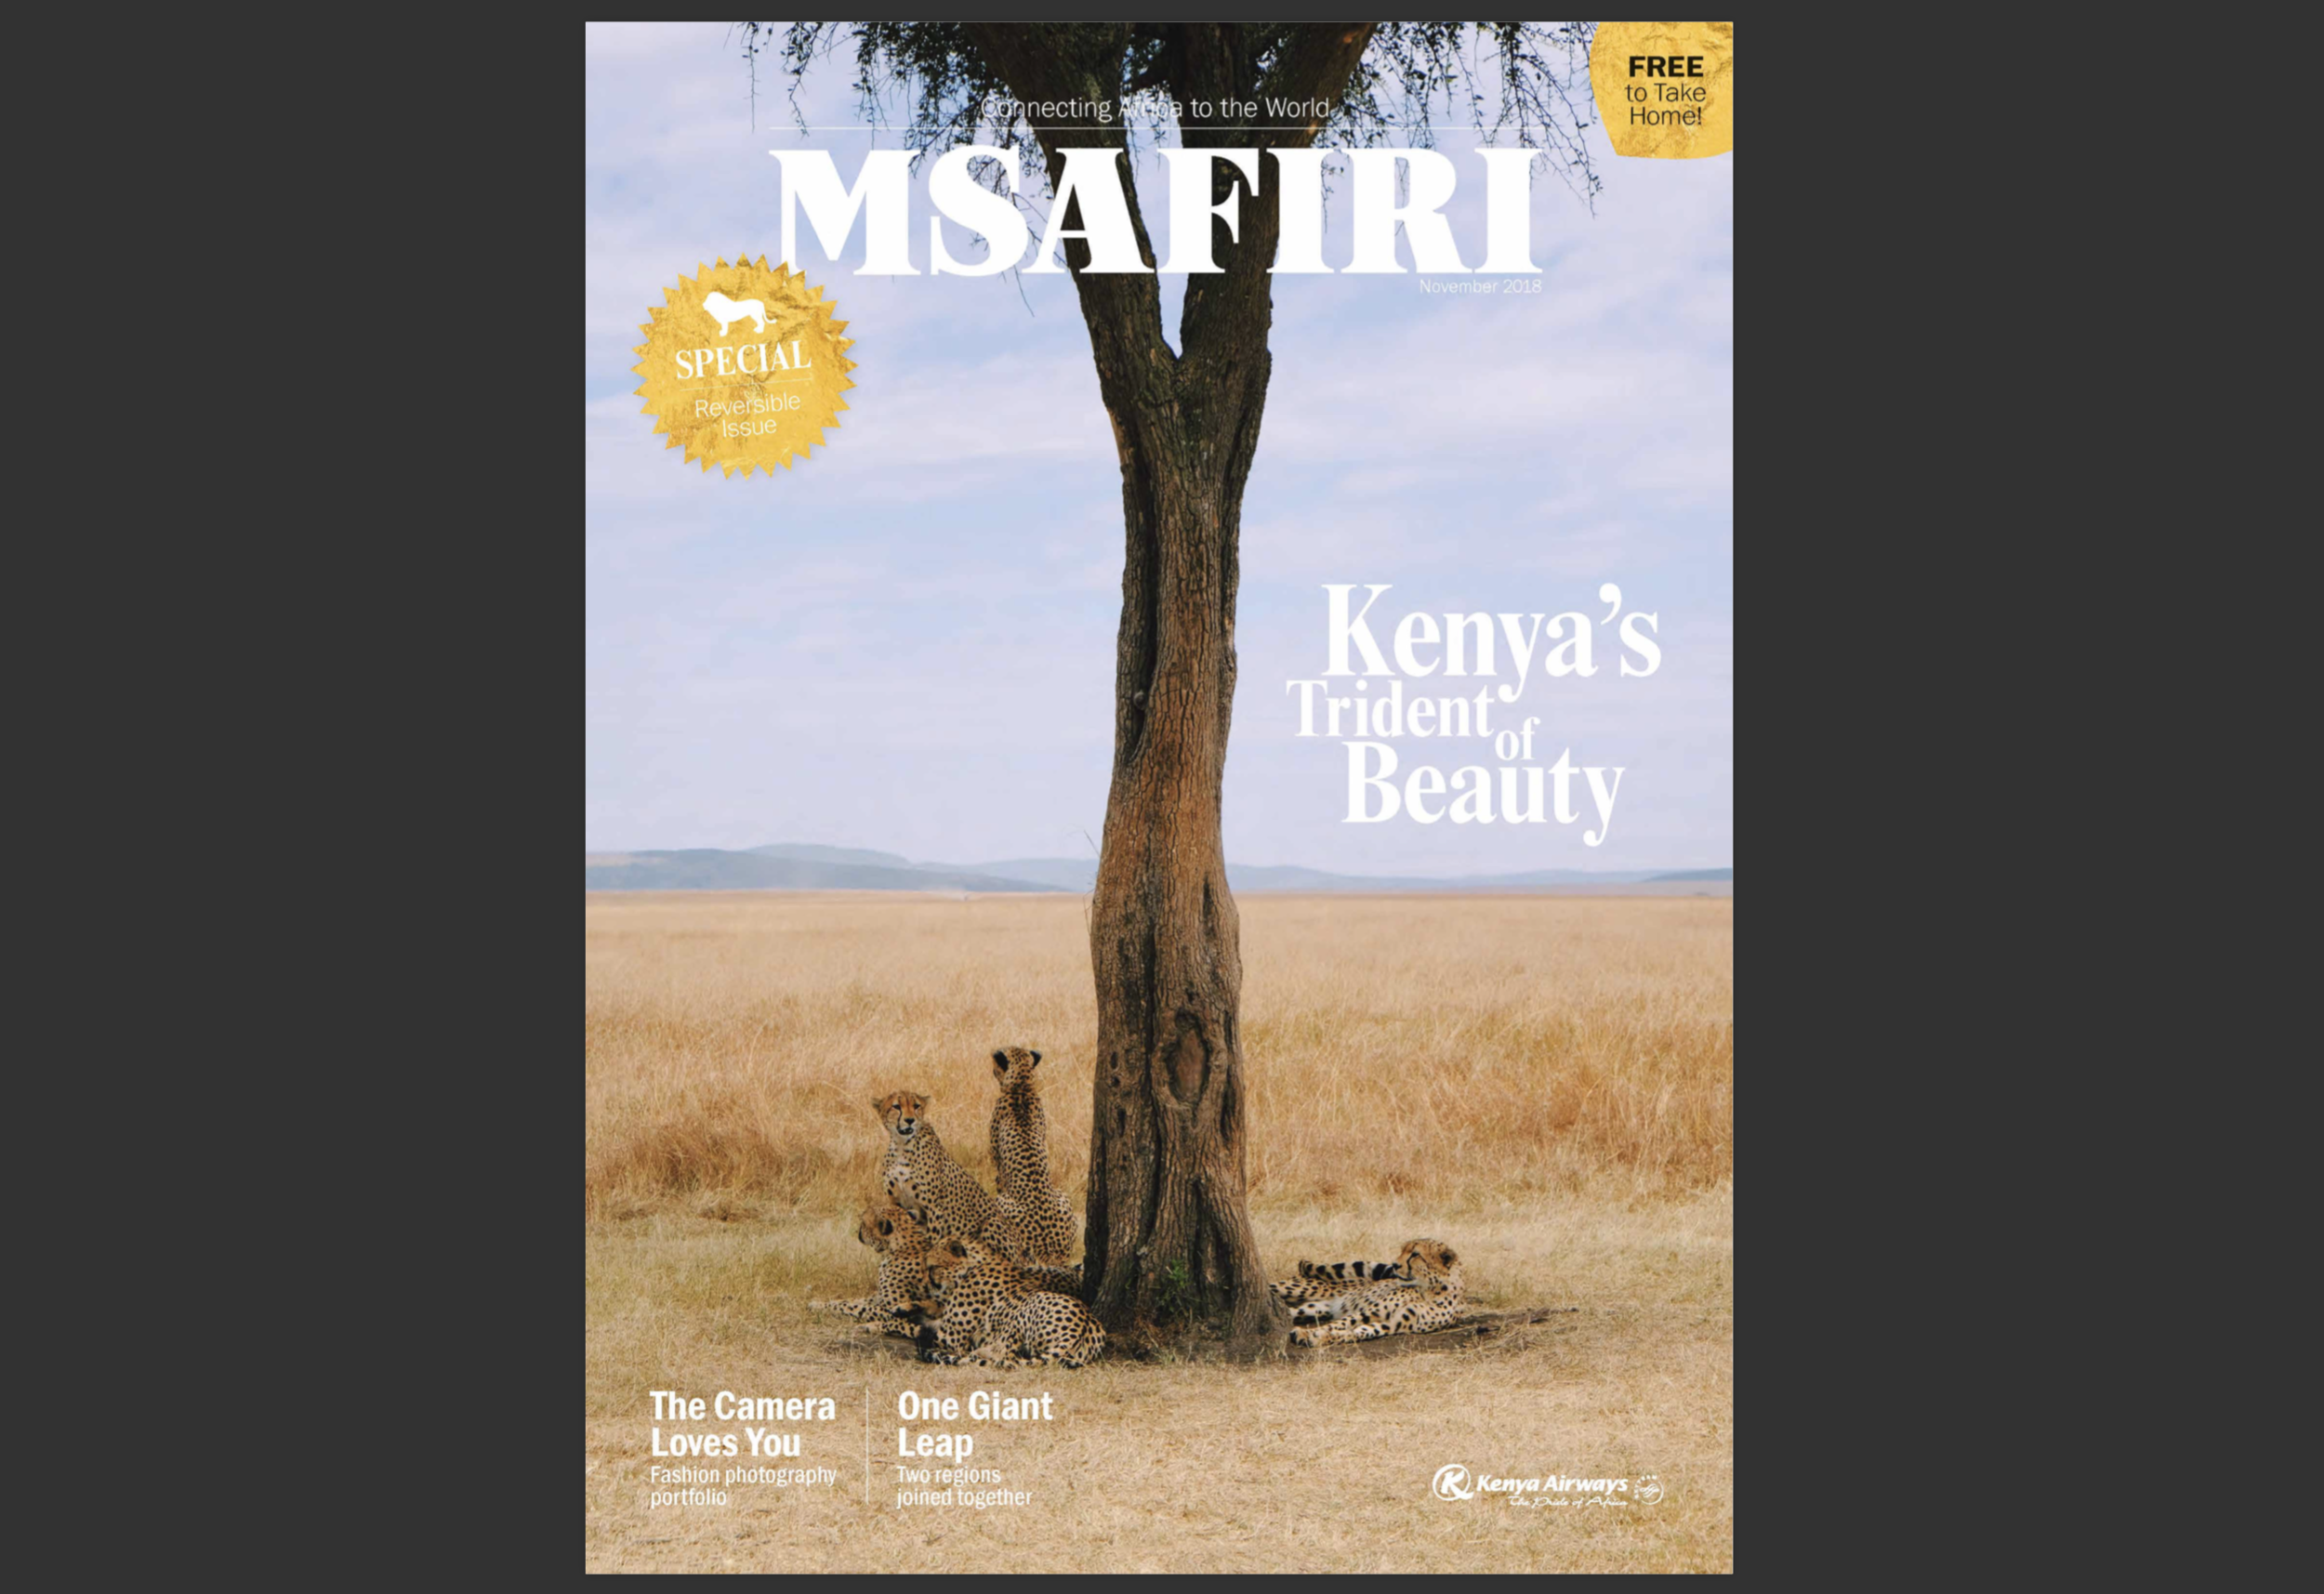 Kenya Airways magazine Msafiri cover by Joost Bastmeijer dc.png